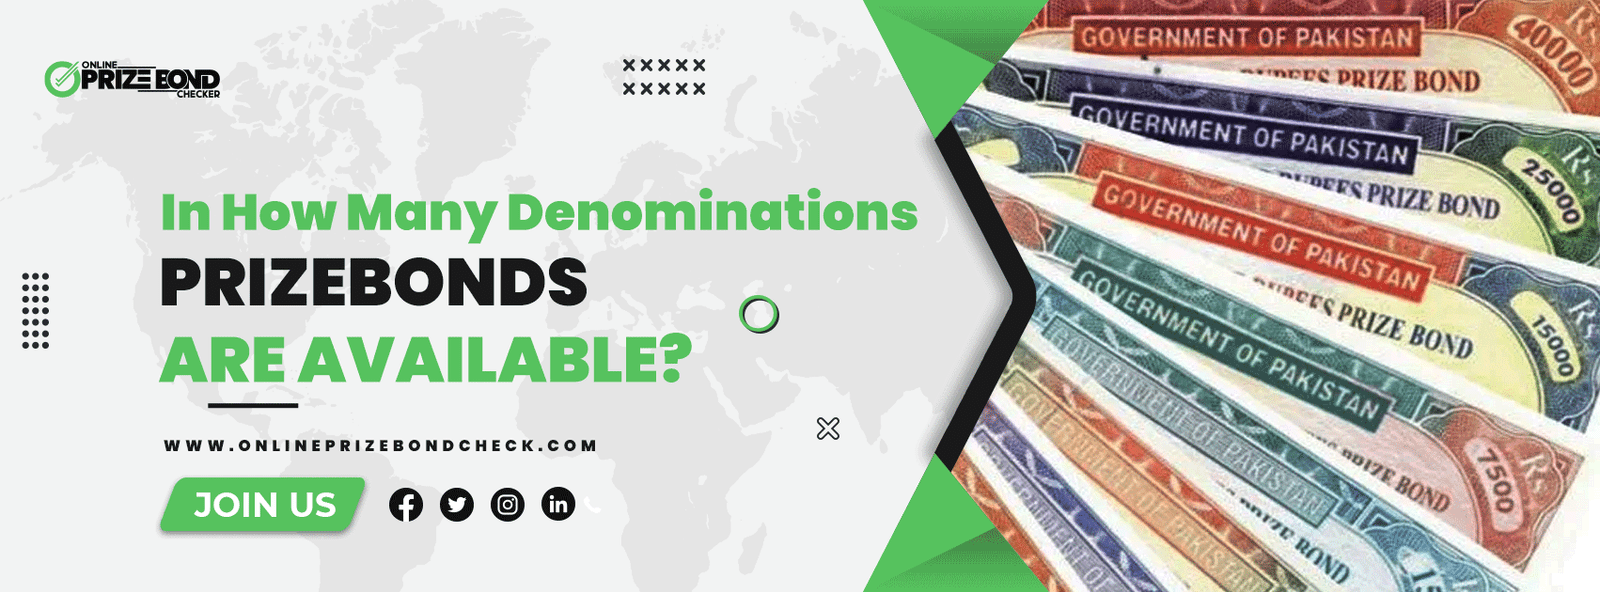 Denominations of Prize Bonds